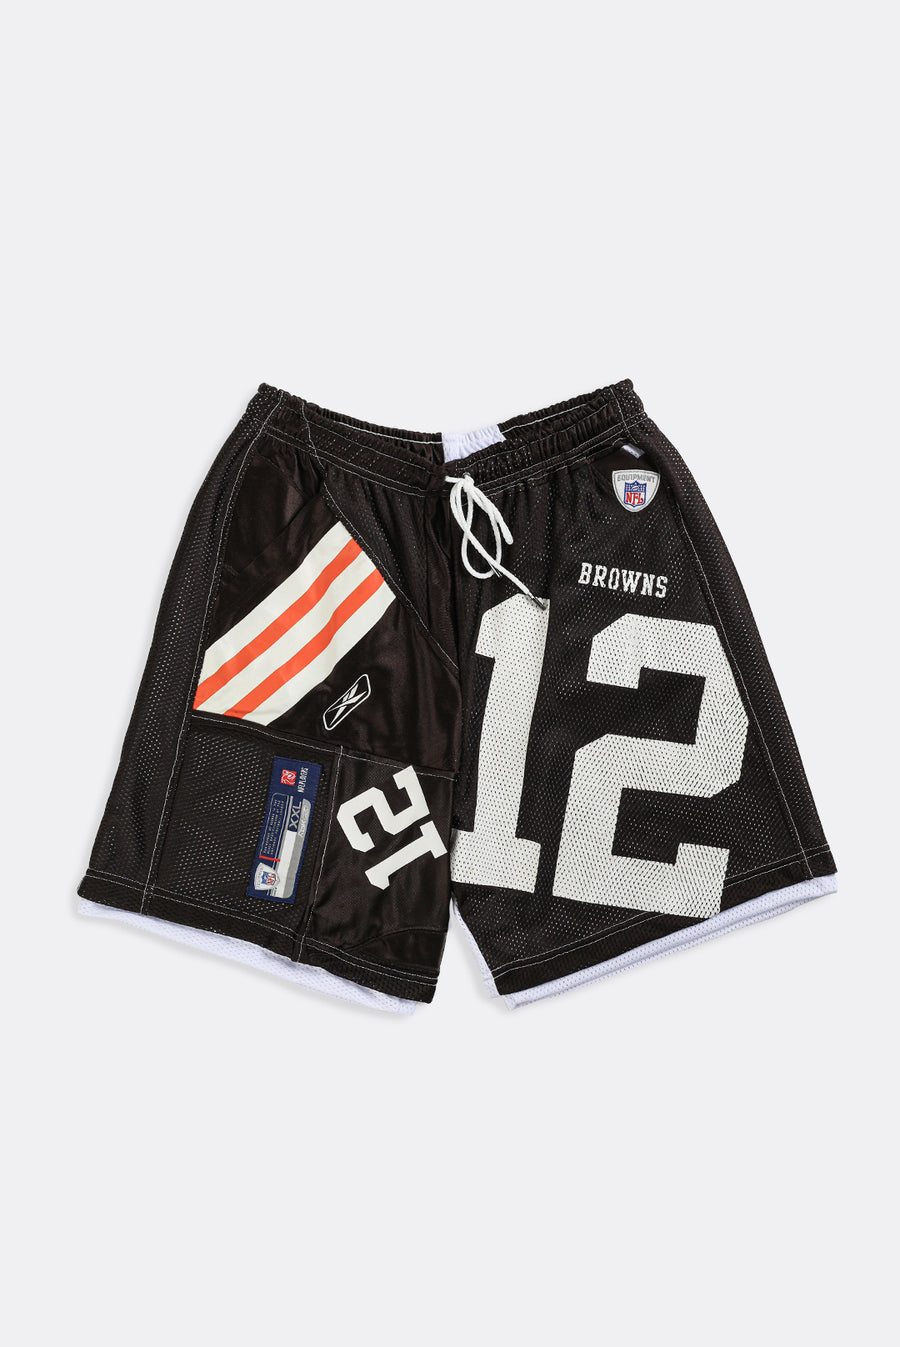 Unisex Rework Browns NFL Jersey Shorts - Women-L, Men-M